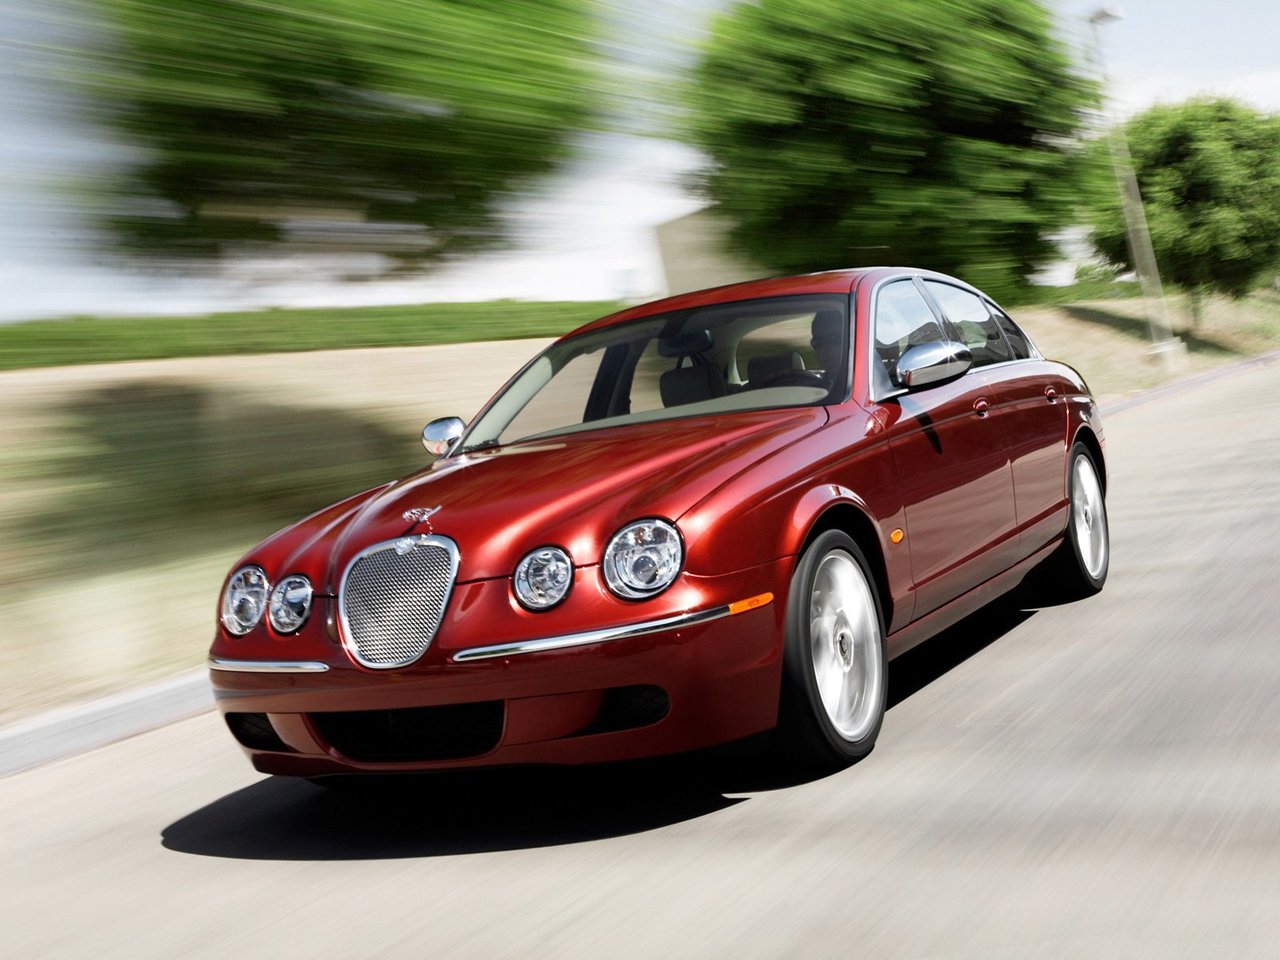 Снижаем расход Jaguar S-Type на топливо, устанавливаем ГБО